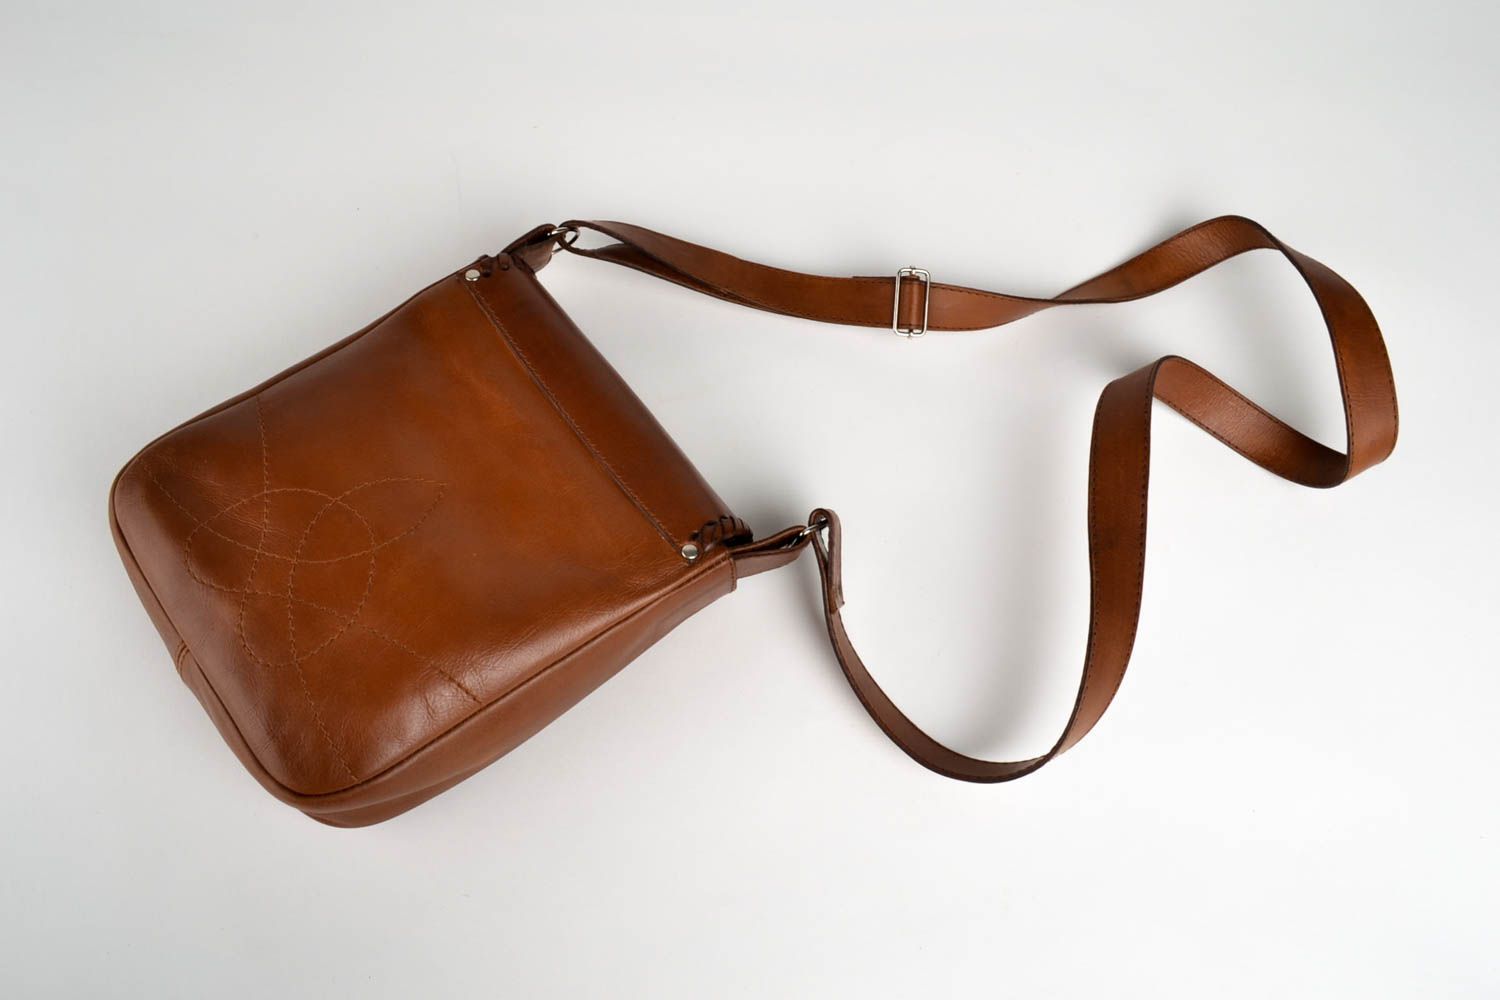 Leather purse designer accessories fashion shoulder bag elegant purse for girls photo 2